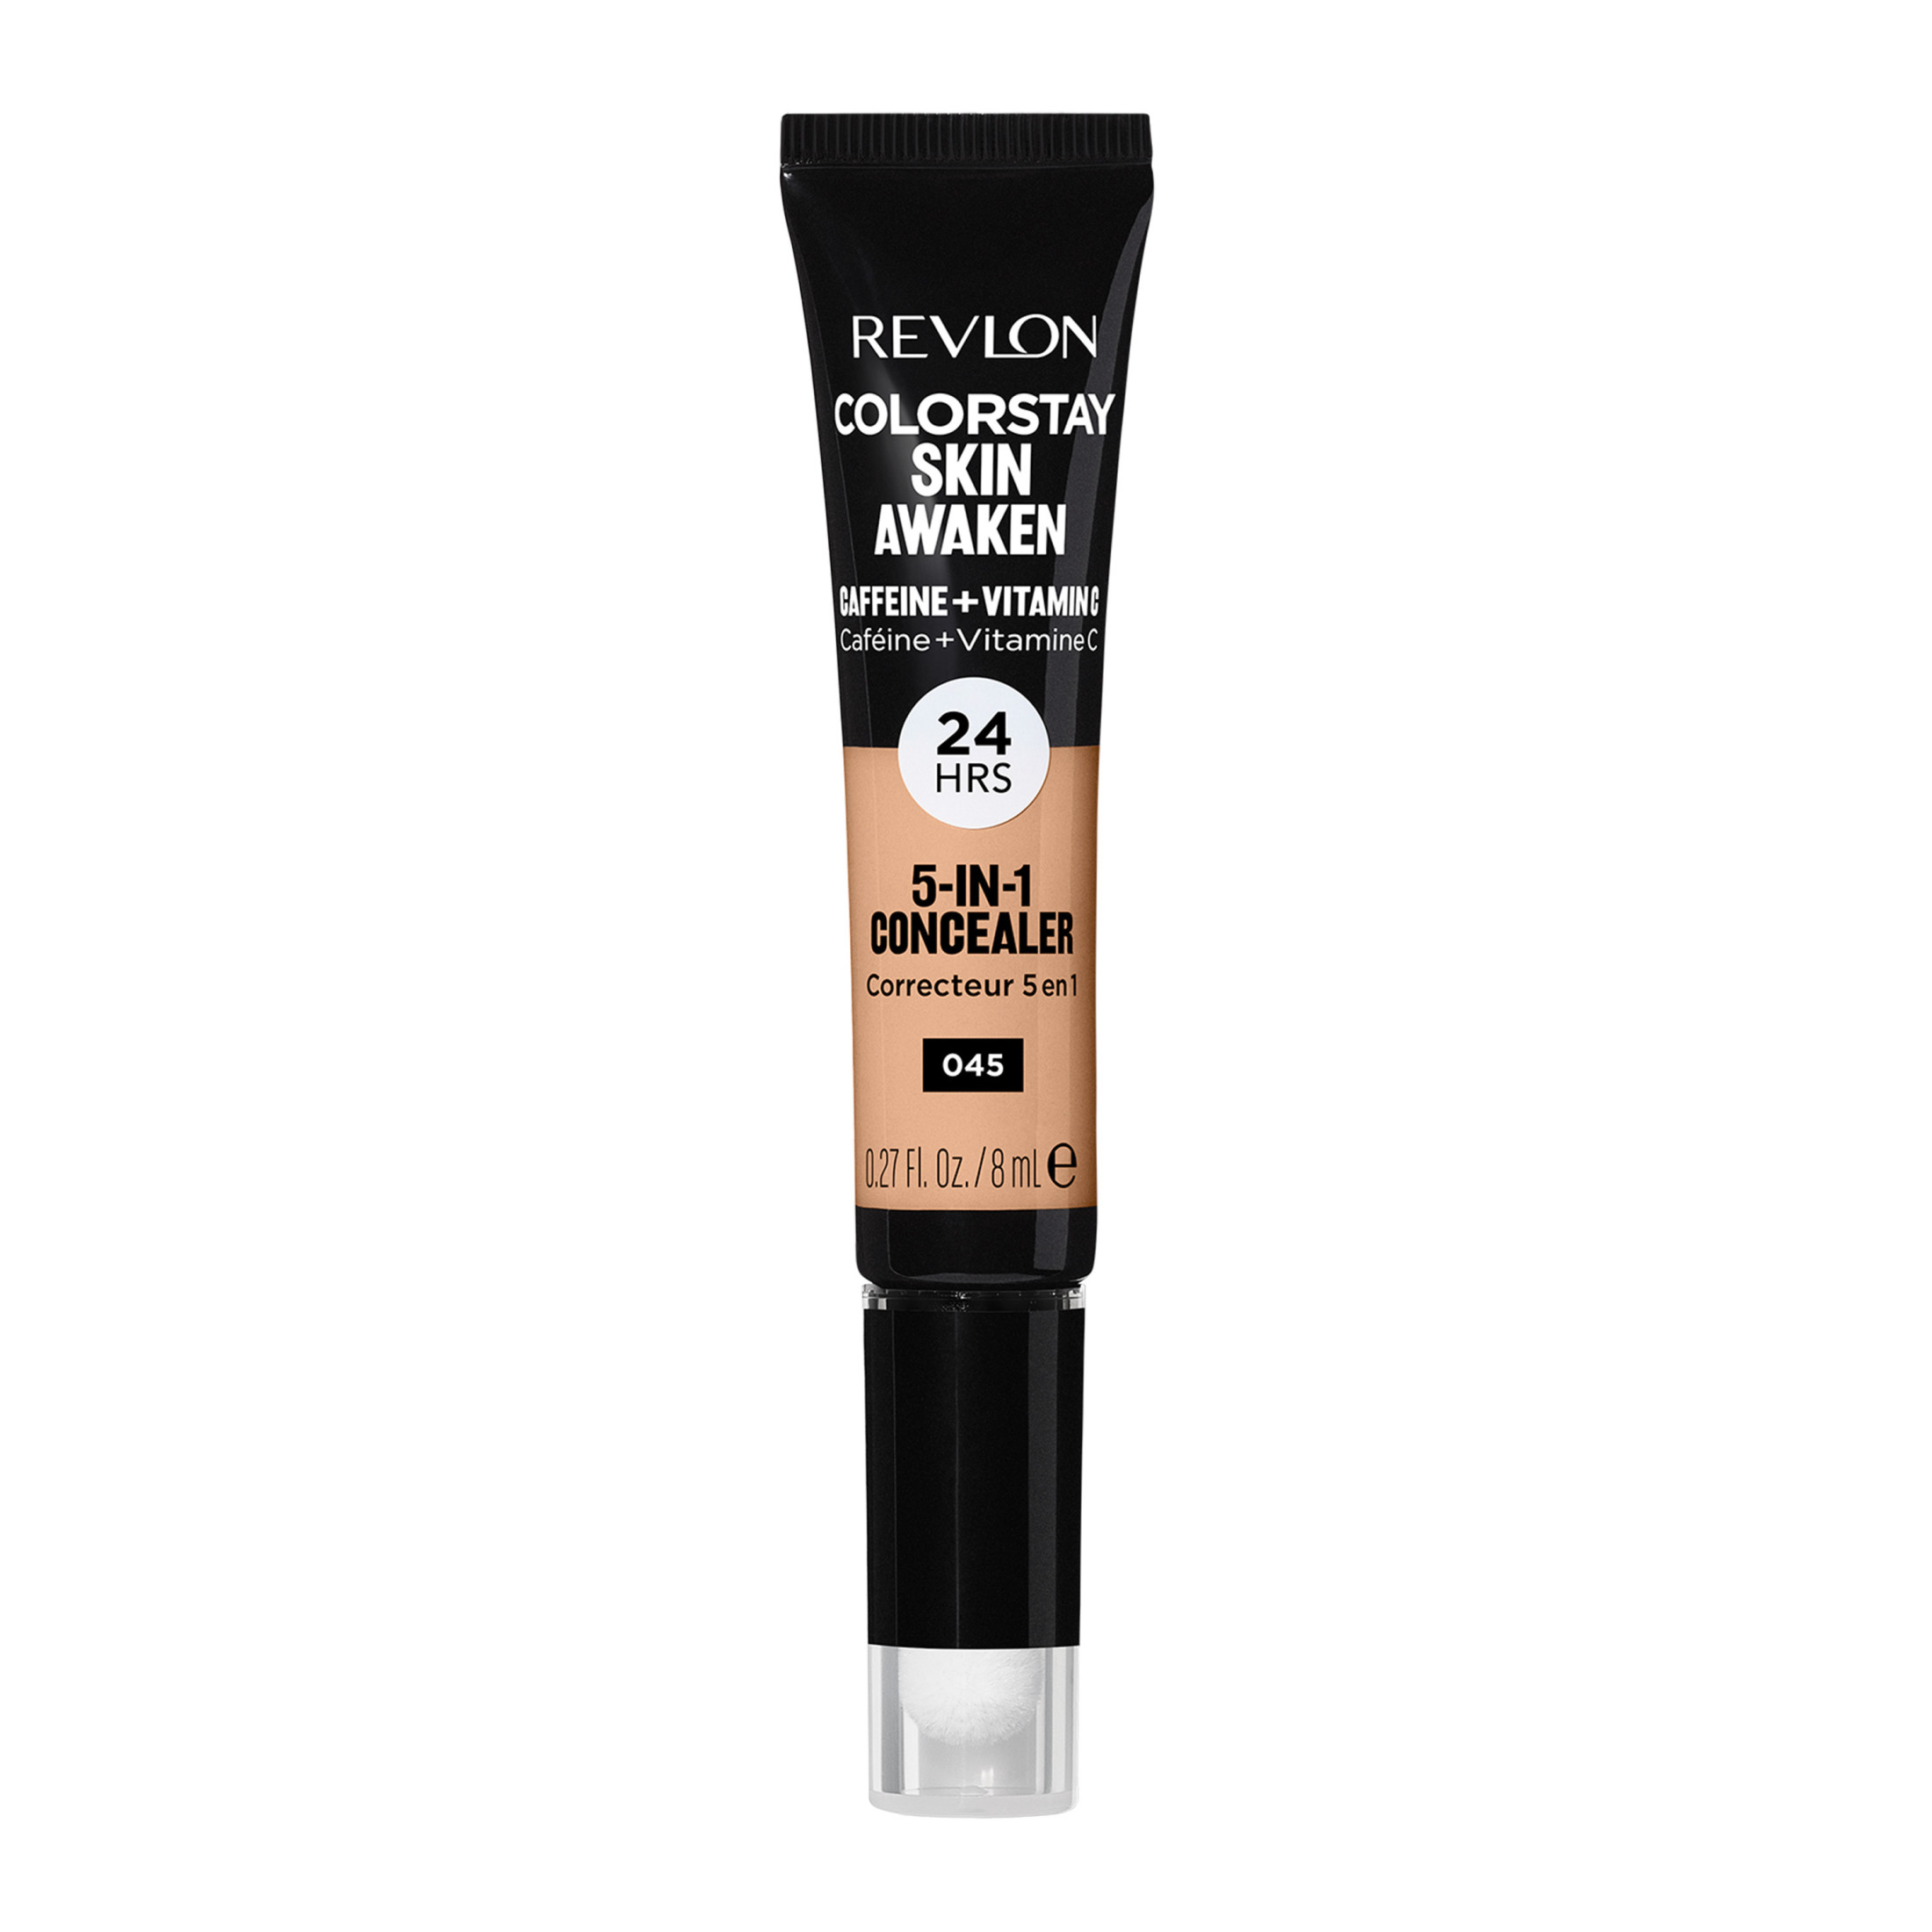 Revlon ColorStay Skin Awaken Cream Concealer Makeup, Longwear, 045 Honey, 0.27 fl oz - image 1 of 10